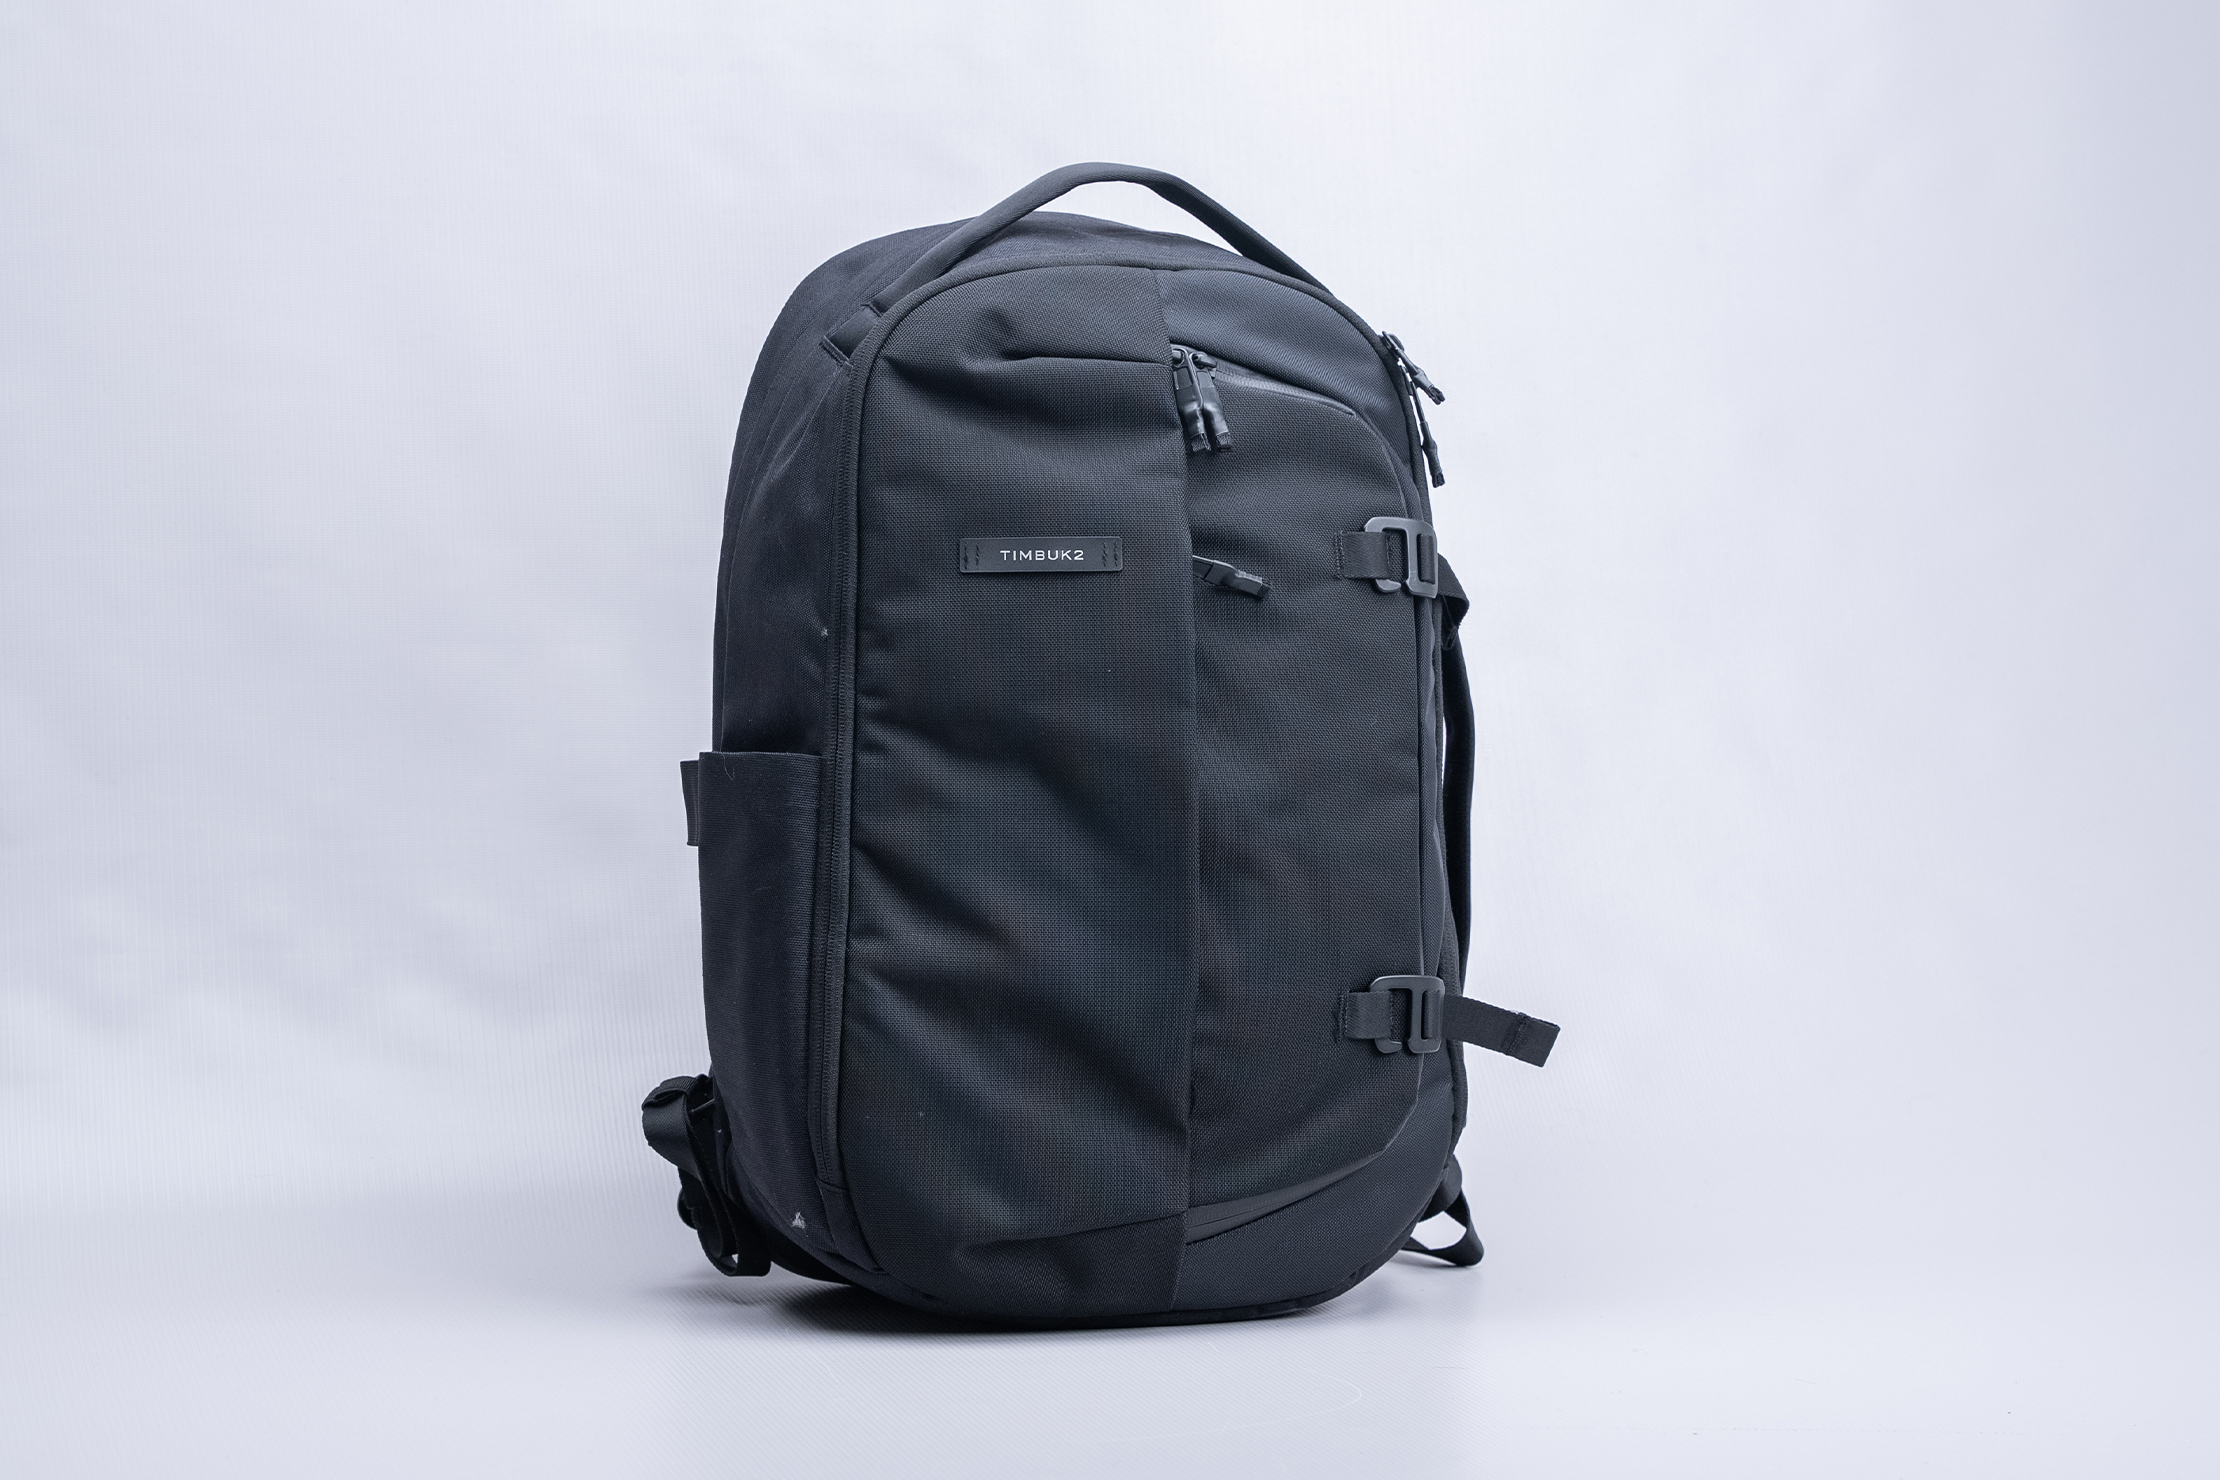 Timbuk2 Never Check Expandable Backpack Full